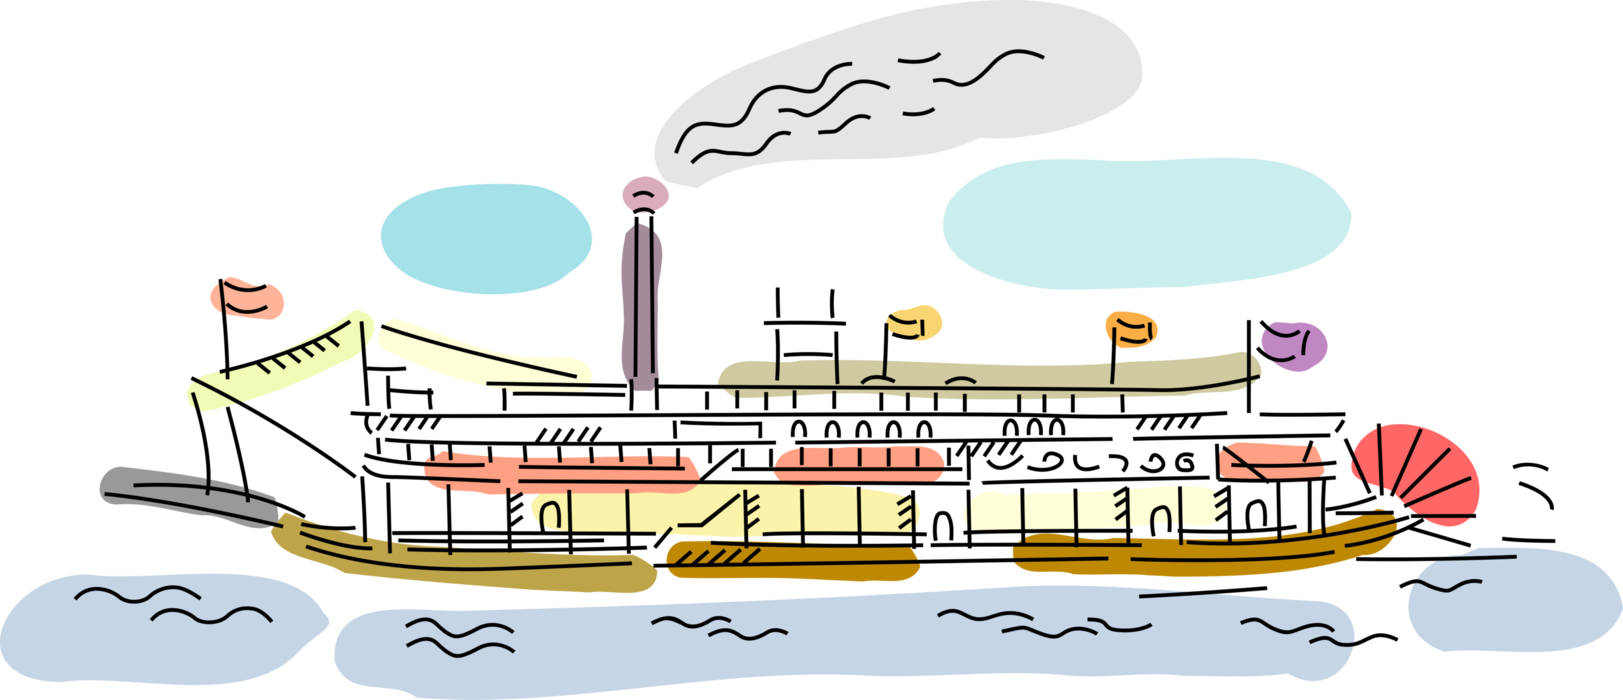 Vector Illustration of Southern Mississippi Riverboat Paddle Wheeler or Paddle Boat Watercraft Vessel